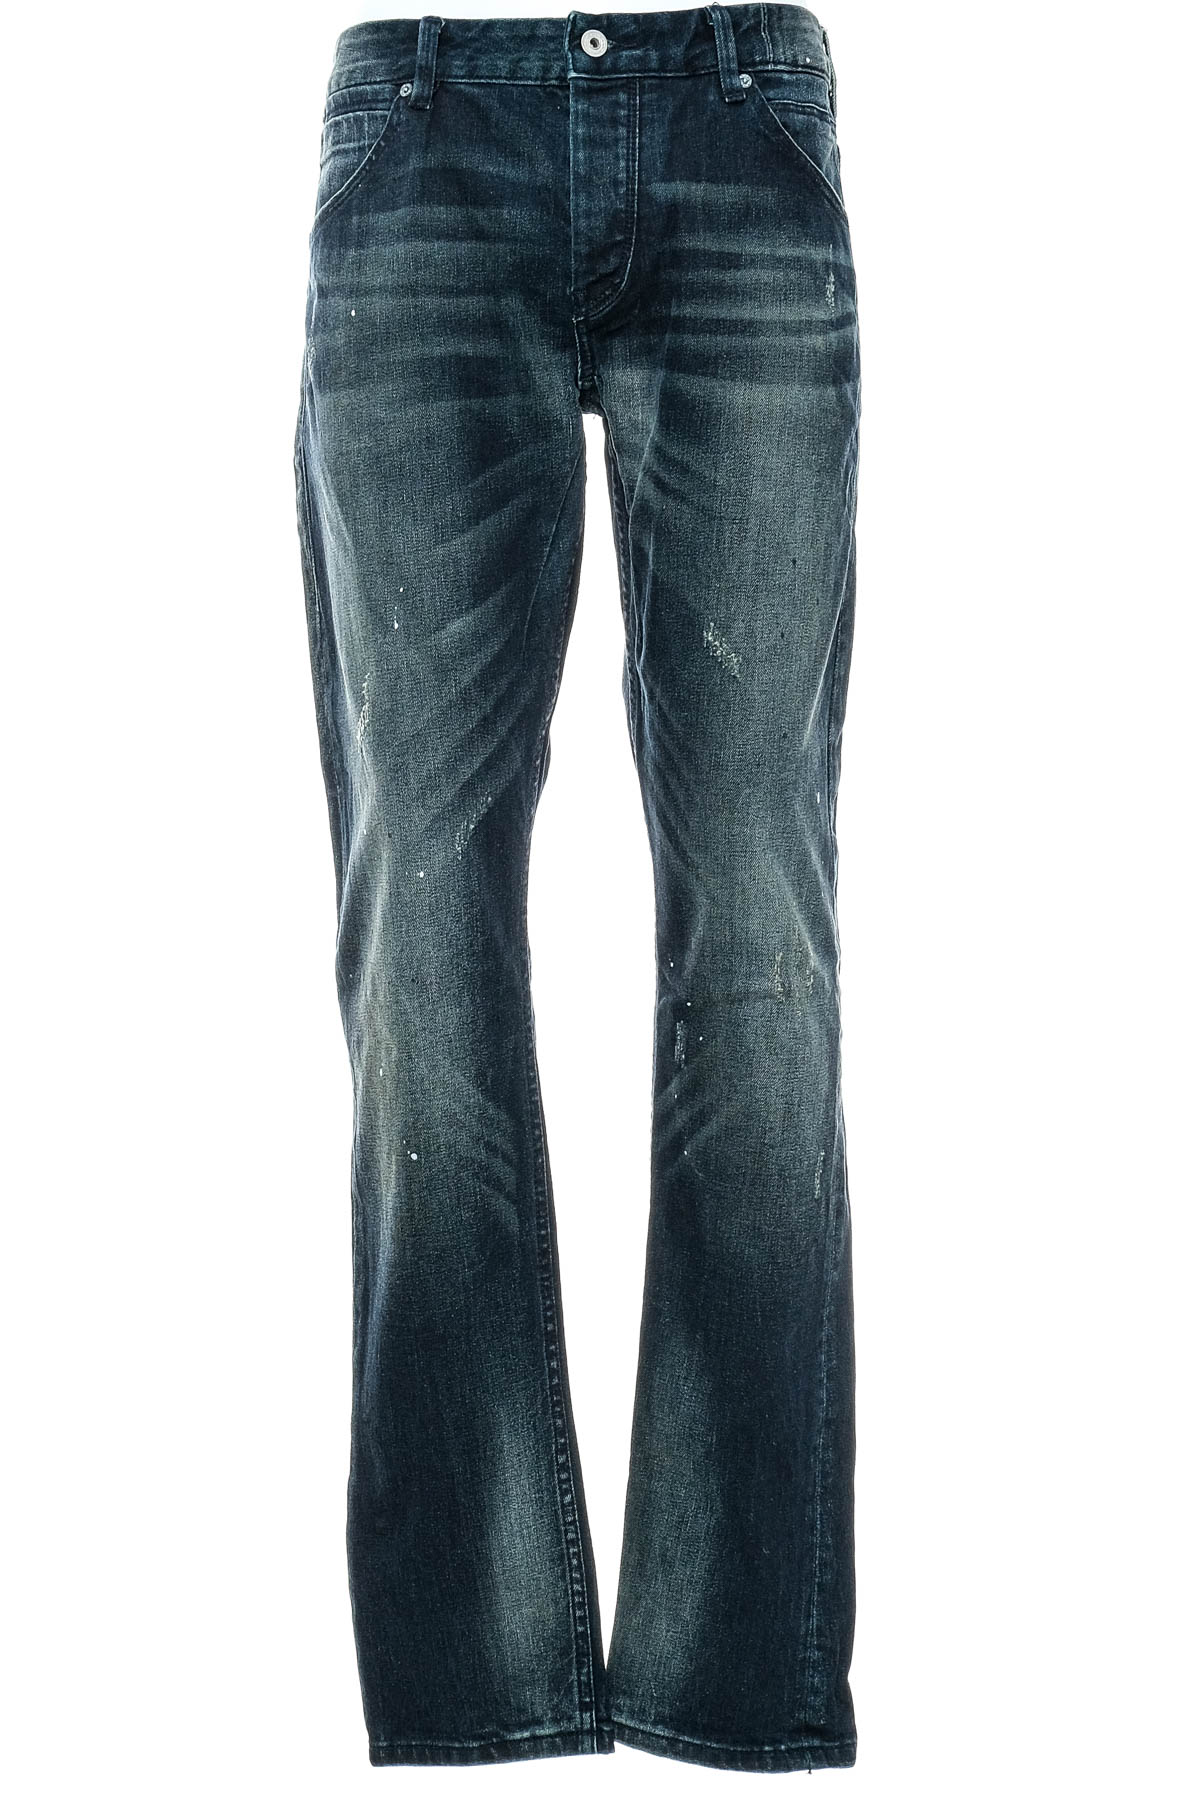 Men's jeans - SCOTCH & SODA - 0